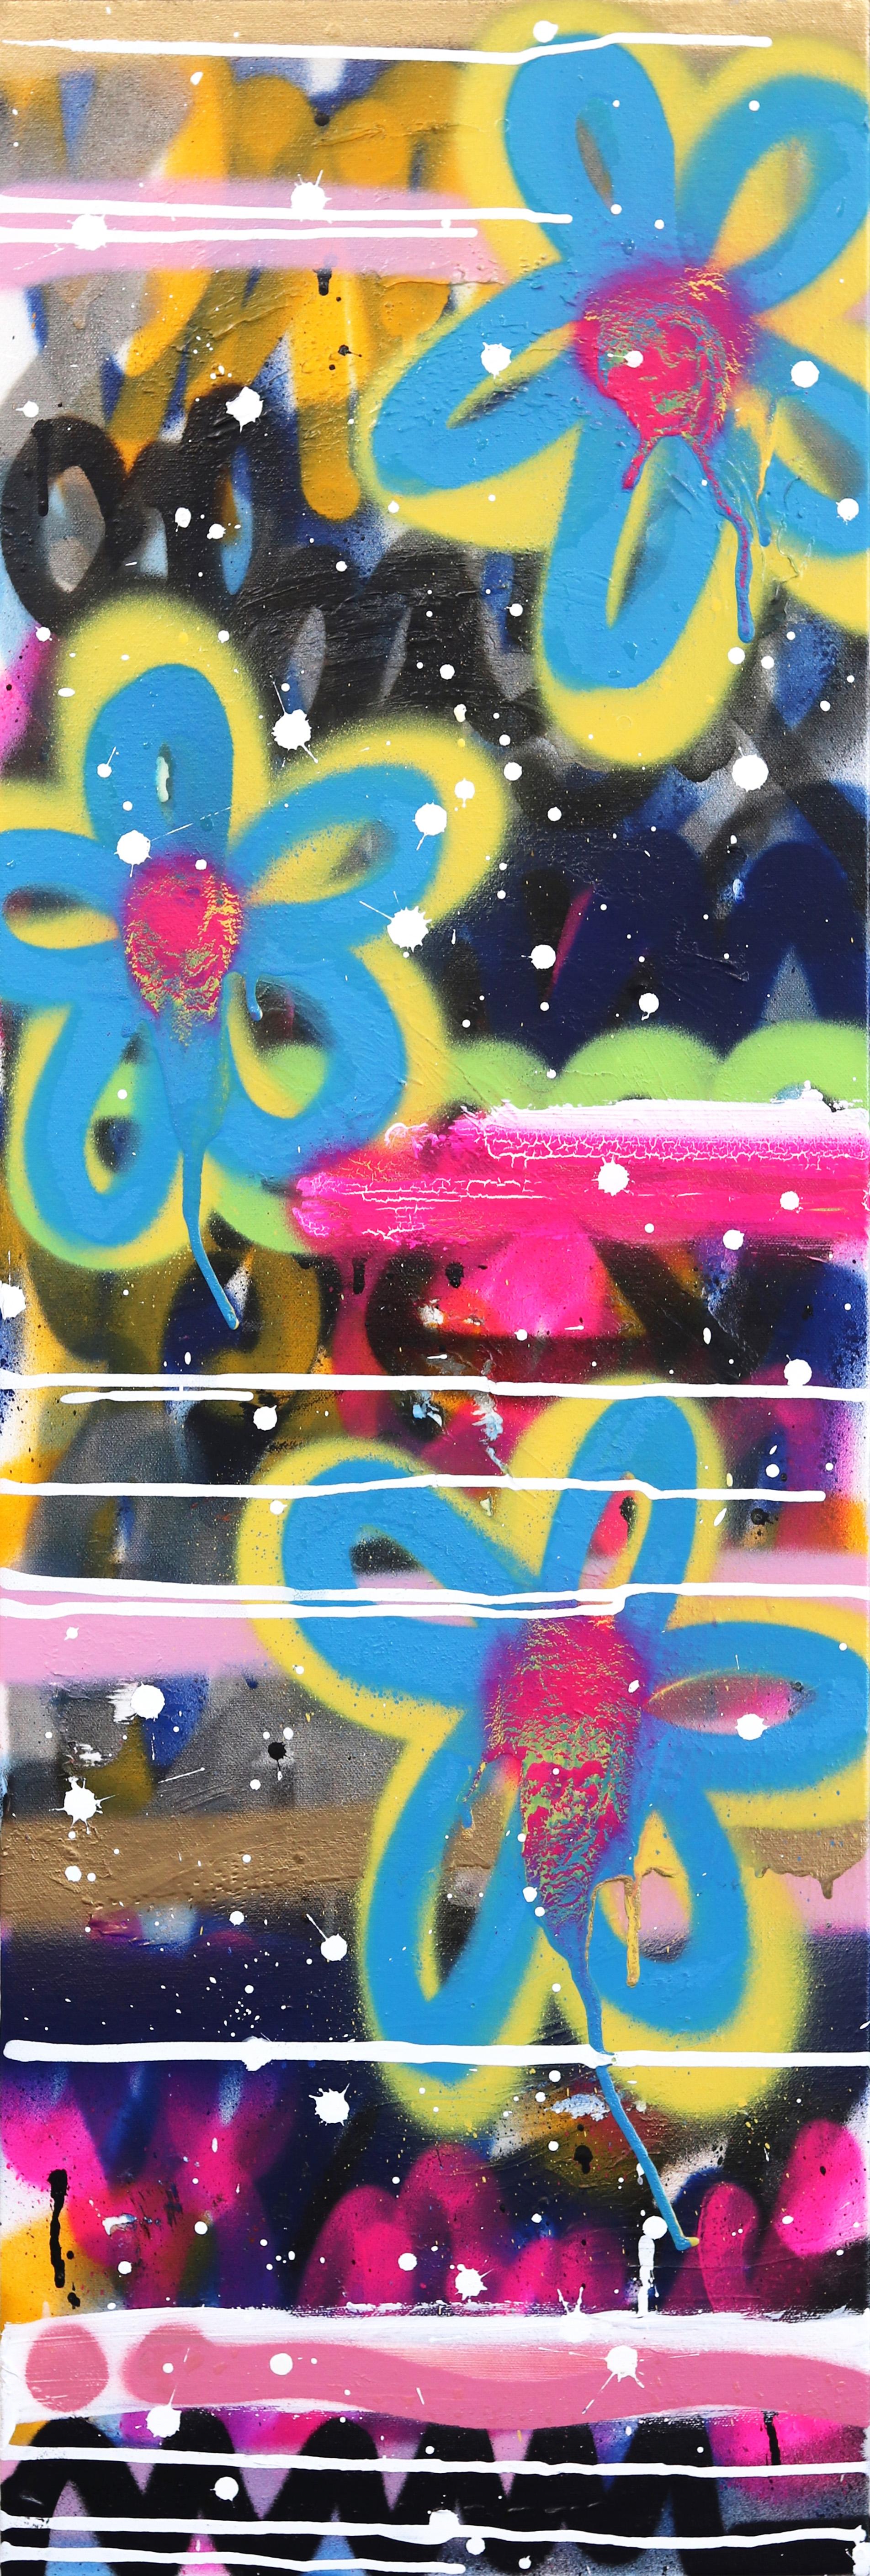 Amber Goldhammer Abstract Painting – Abendblumen – Originales farbenfrohes Urban Love Pop Street Art Graffiti-Gemälde